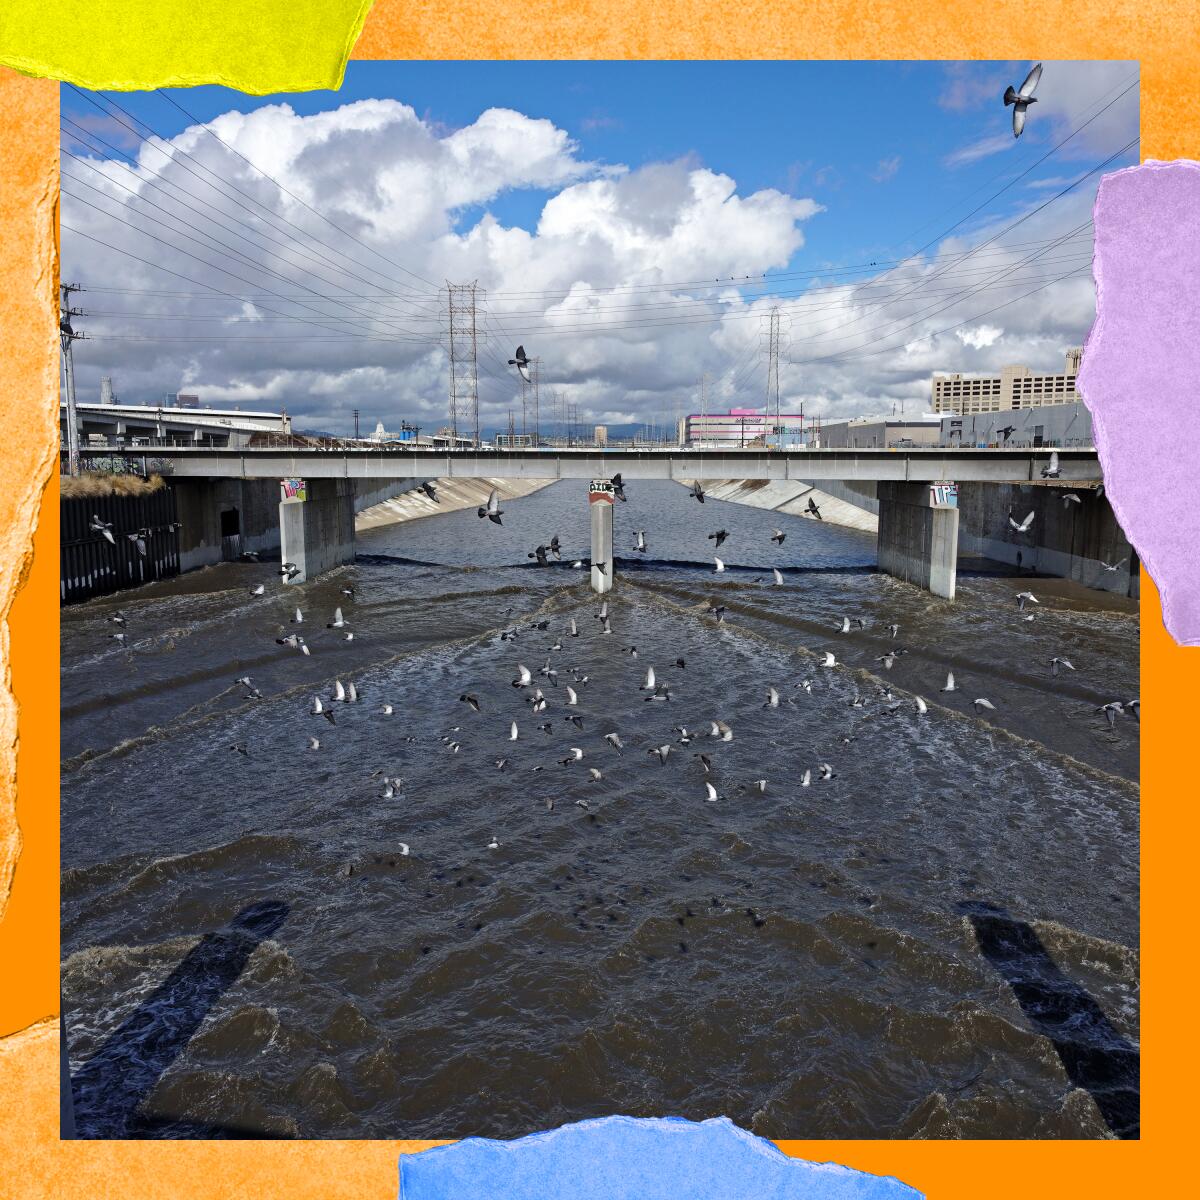 Birds gather on a shallow river in a concrete channel where it runs under a bridge.